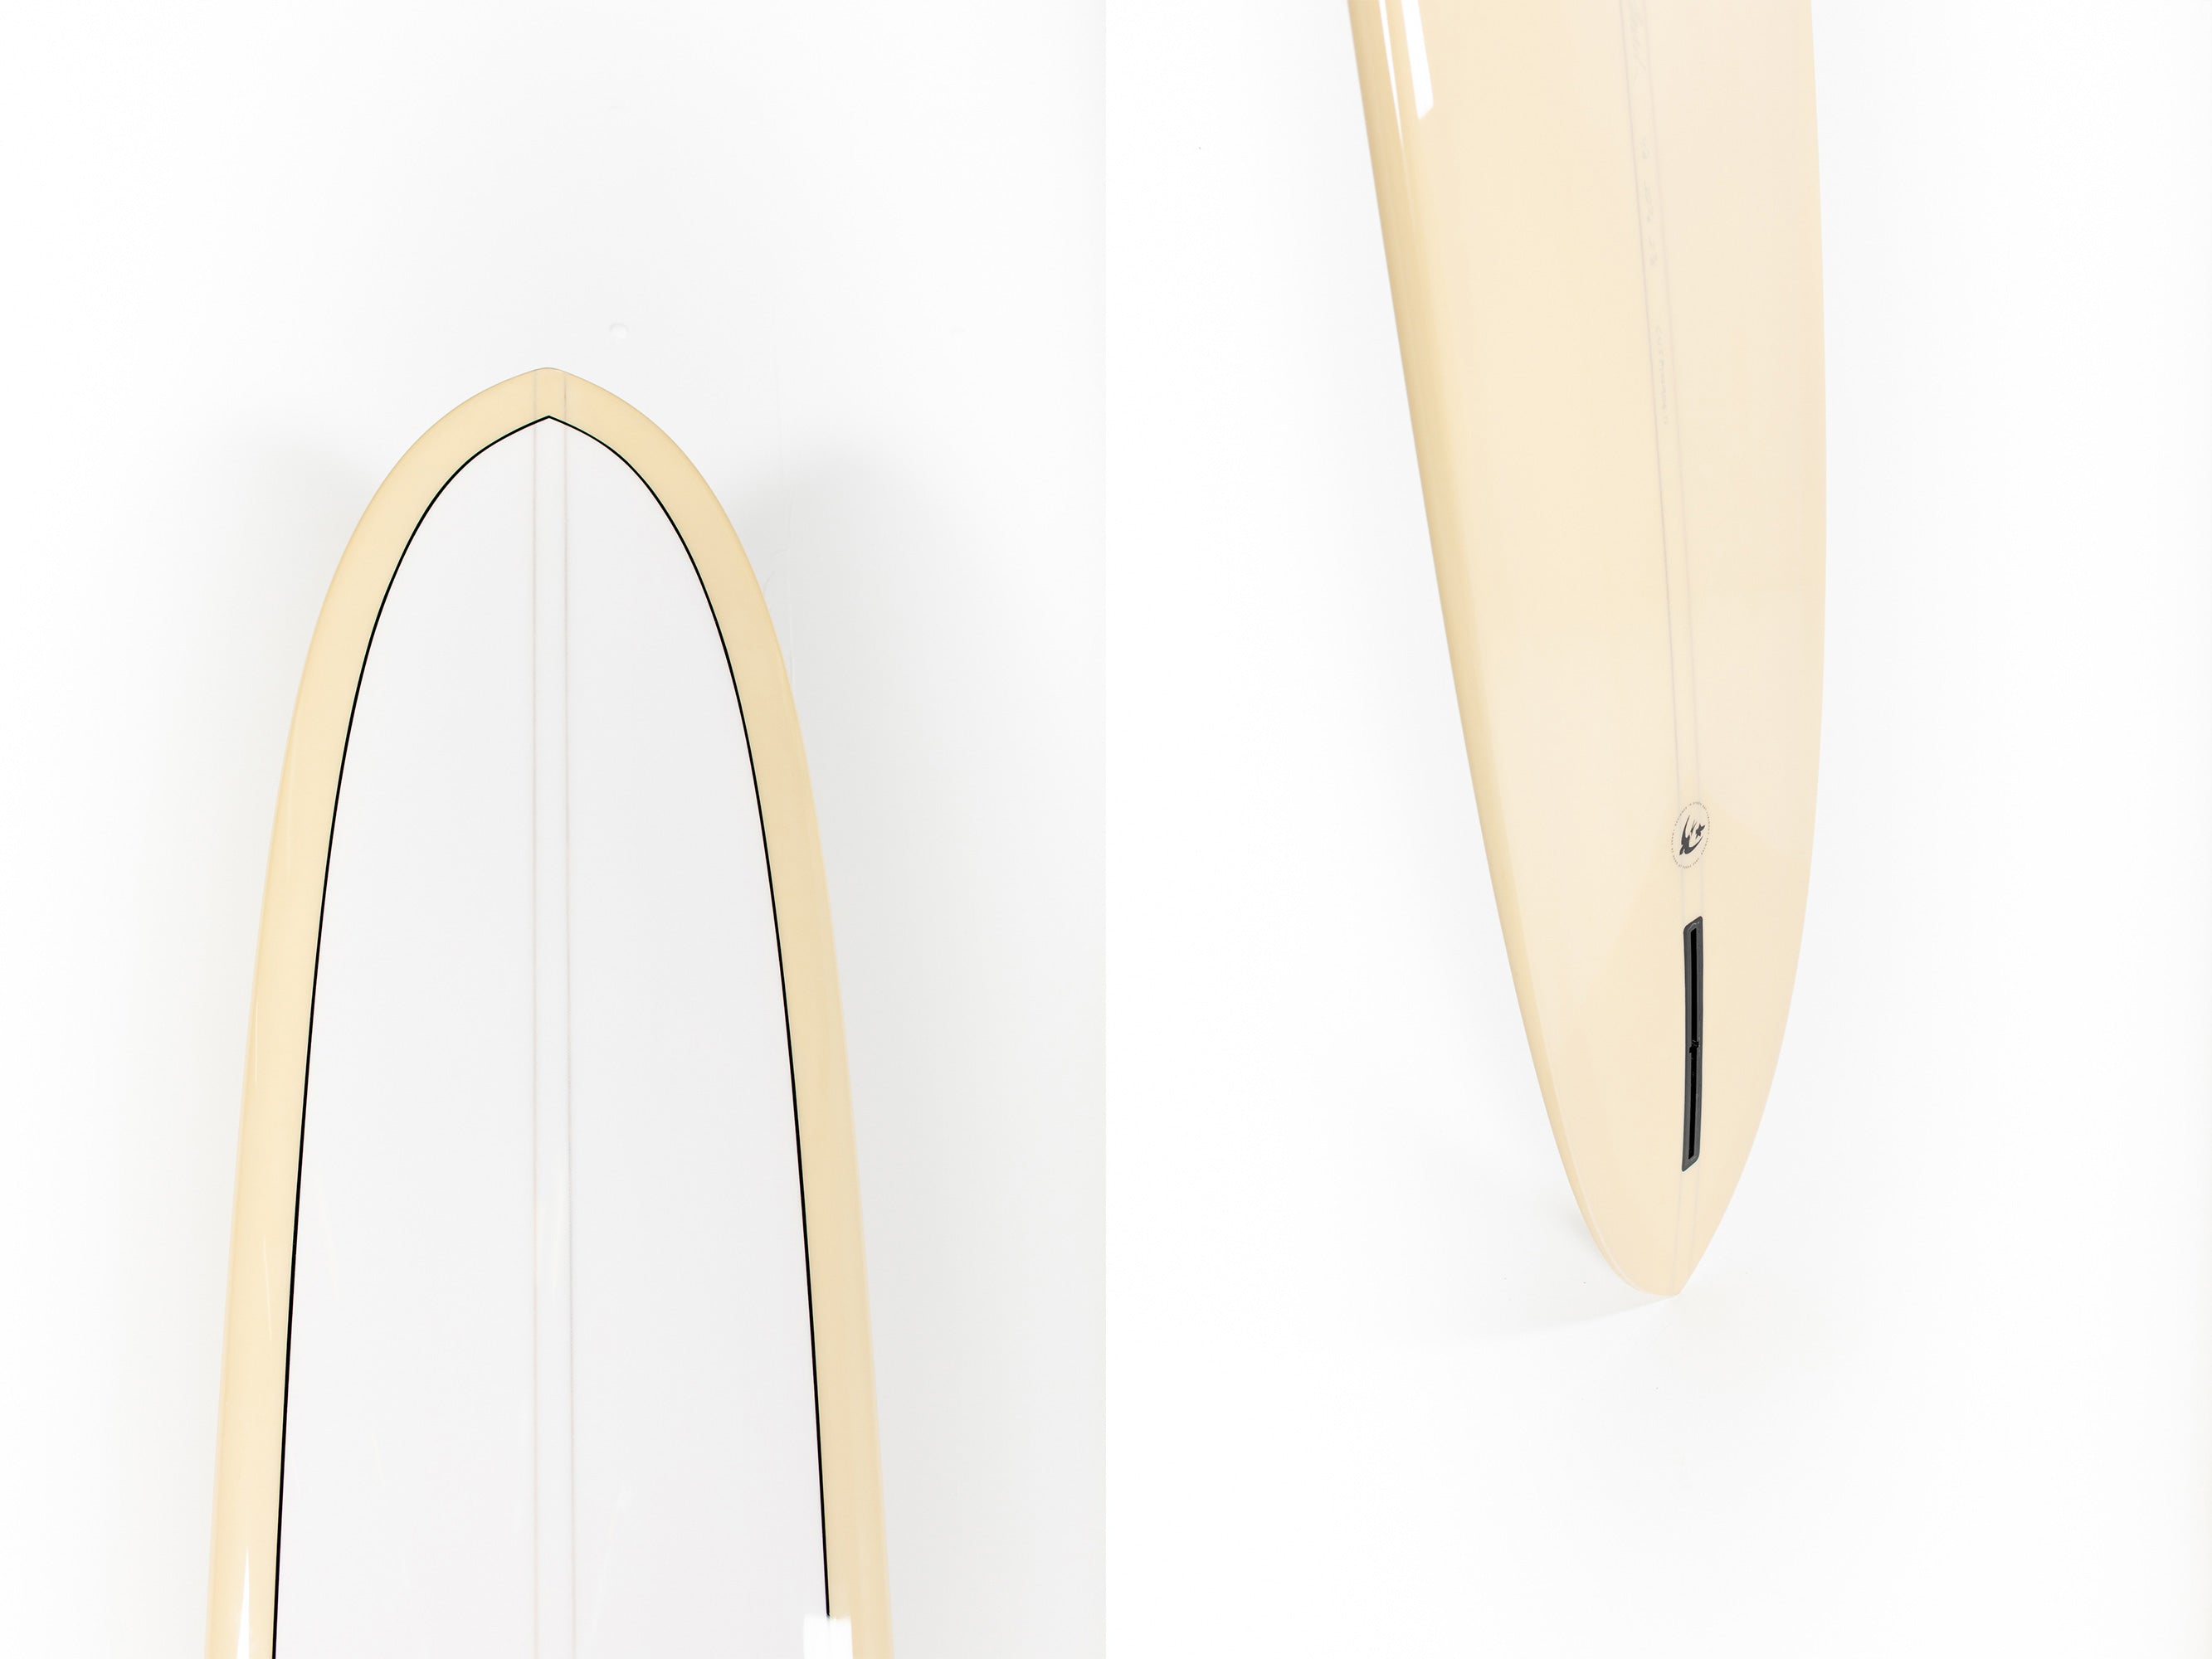 Pukas Surf Shop McTavish Surfboards Pinnacle